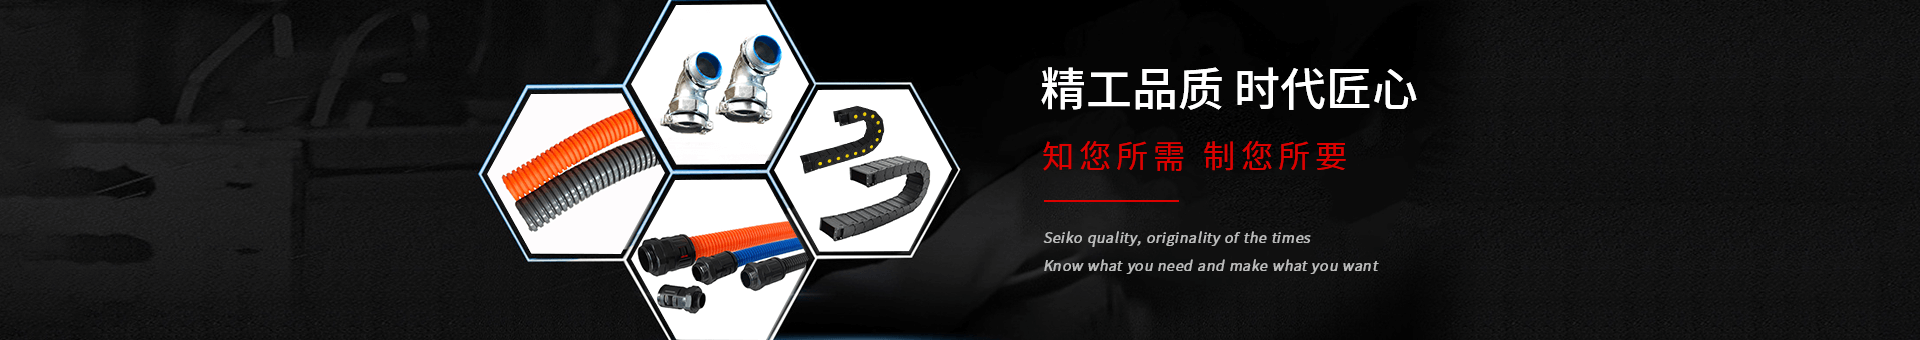 nba中国官方网站机械banner